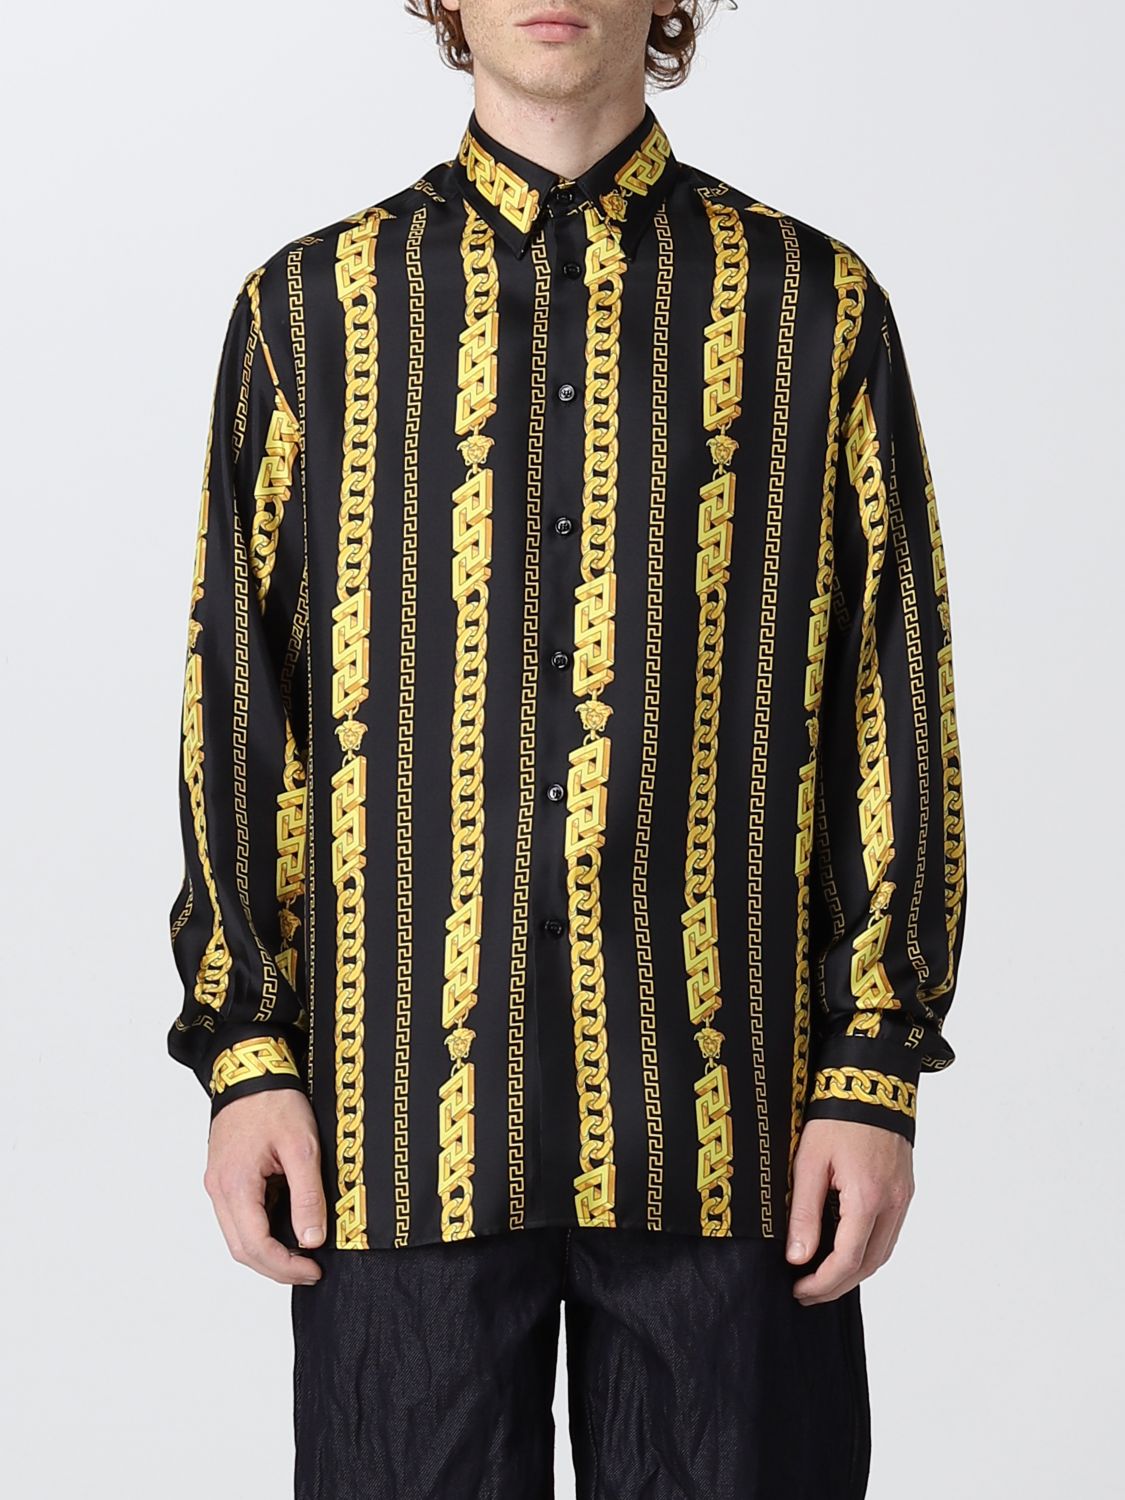 Mainstream globaal Ook VERSACE: chain pinstripe silk shirt - Black | Versace shirt 10039411A02814  online on GIGLIO.COM